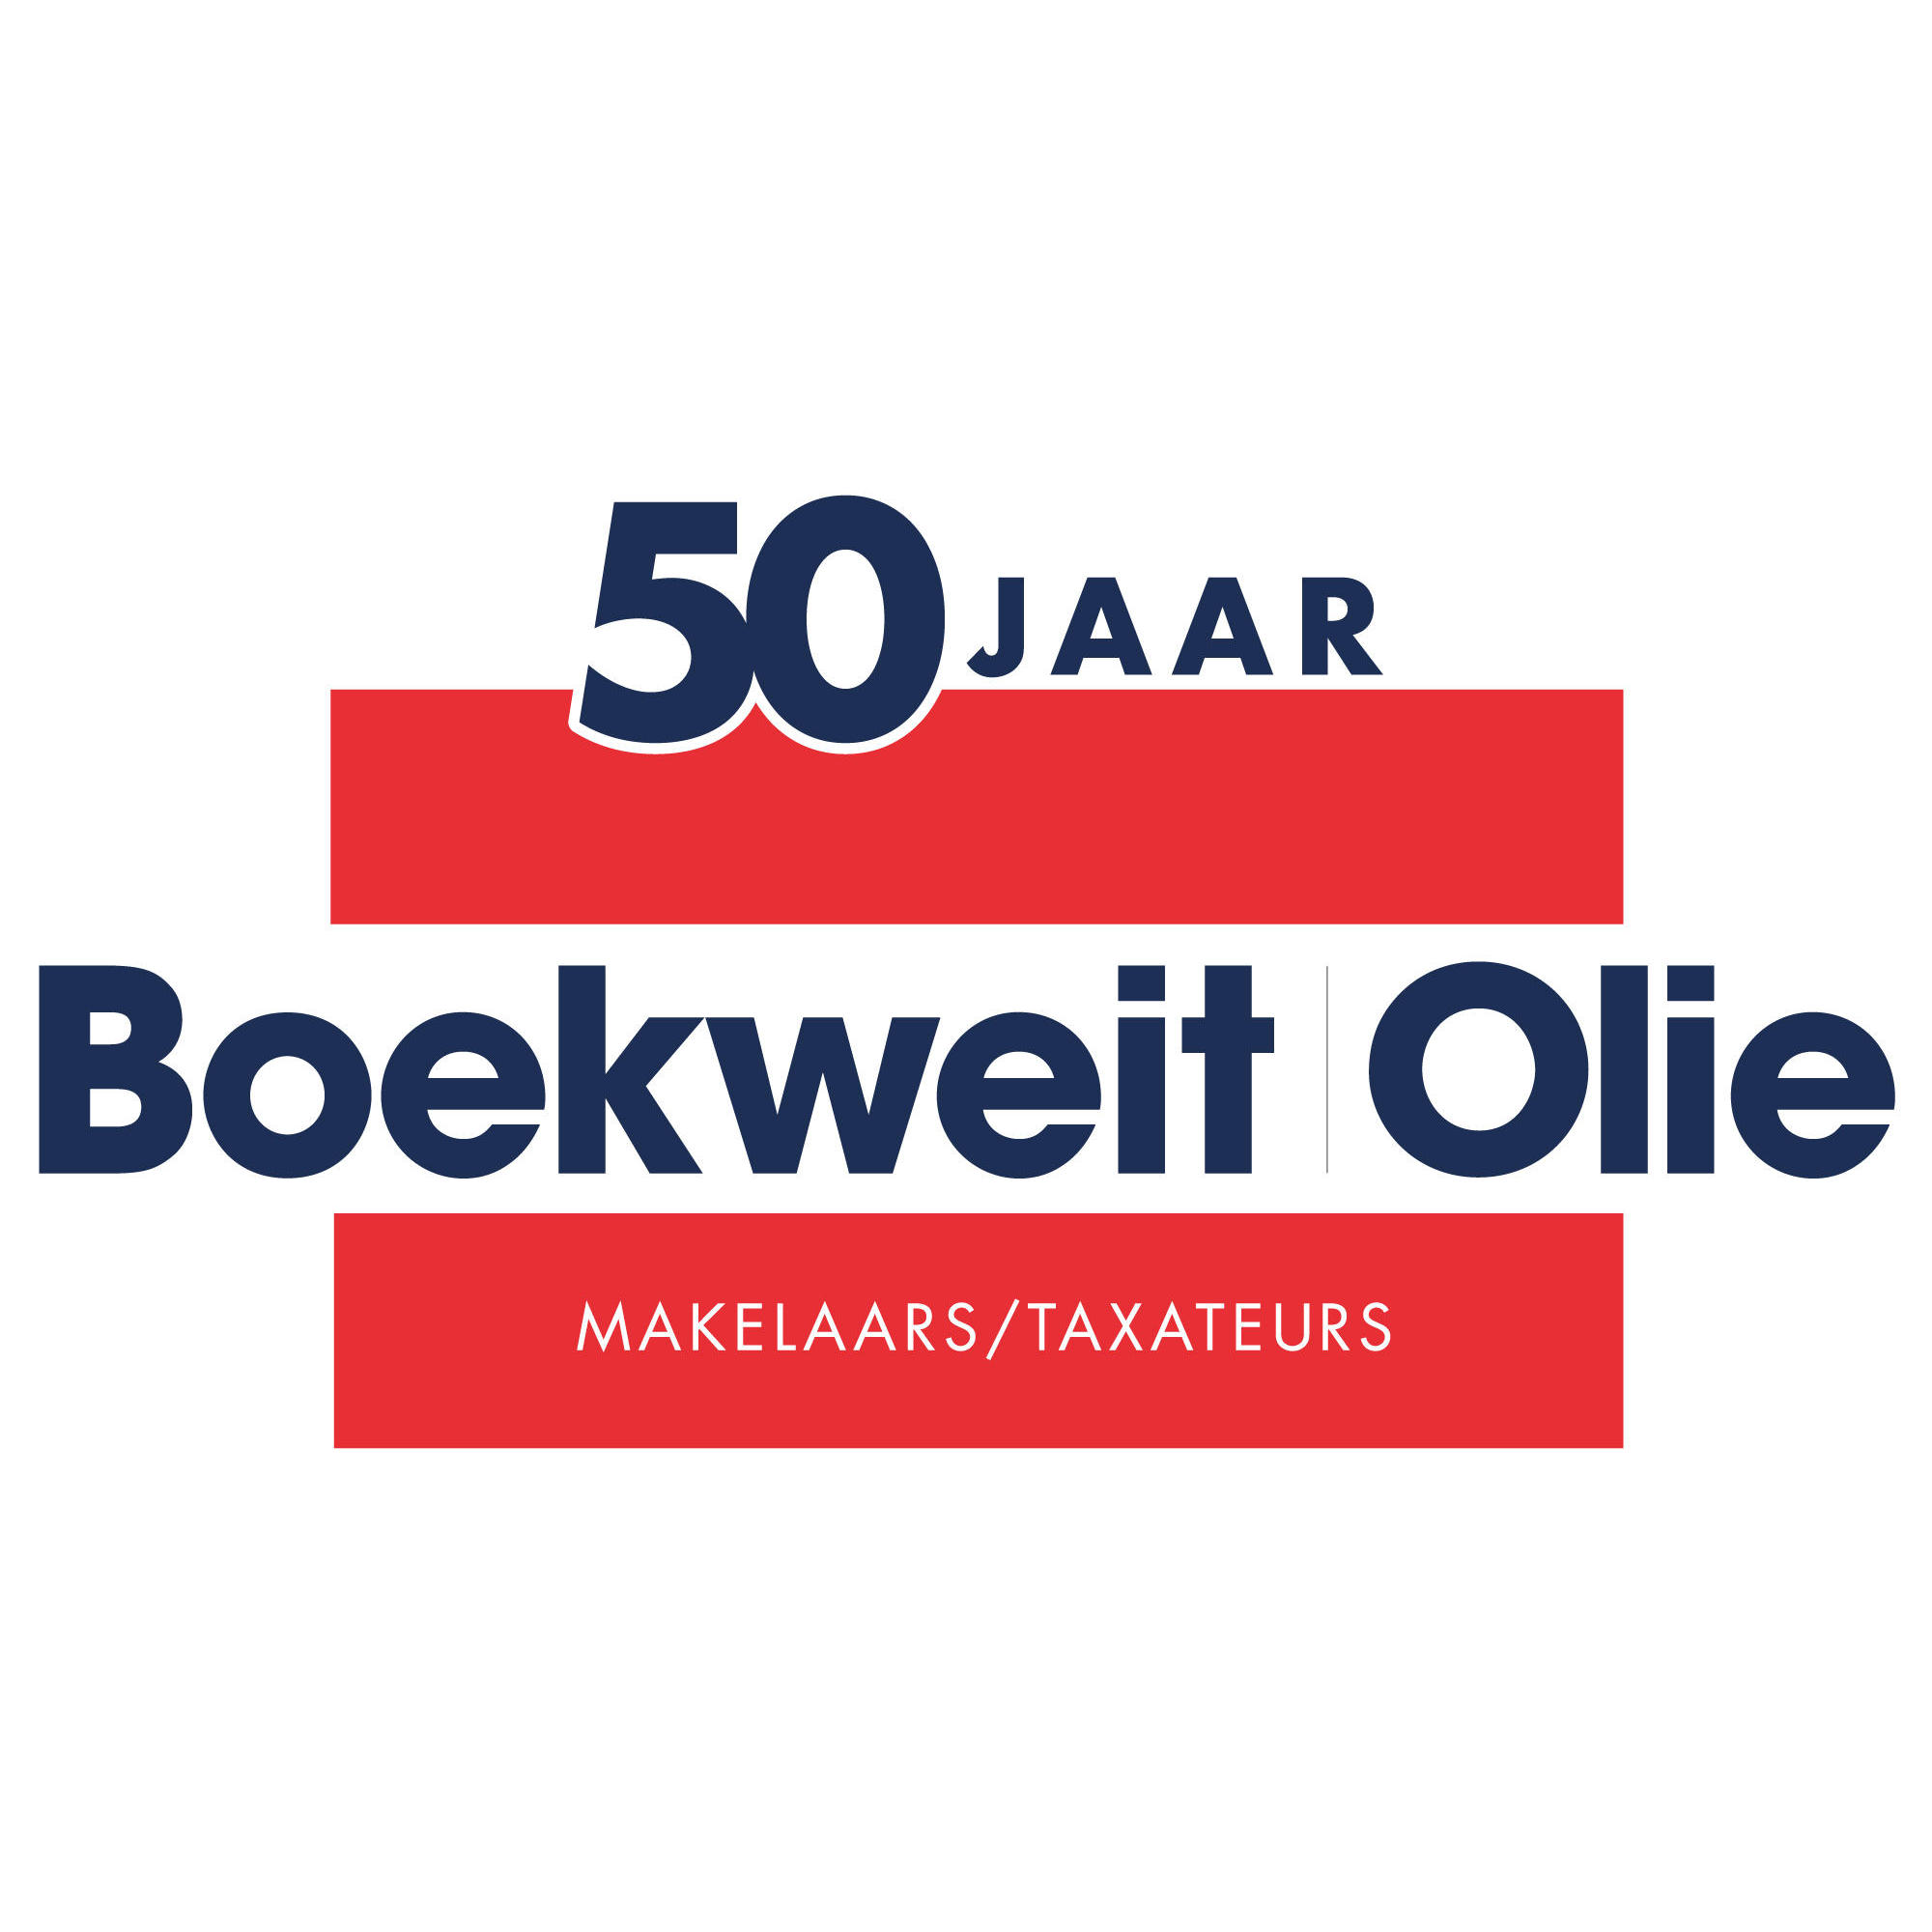 Boekweit Olie Makelaars Taxateurs Logo